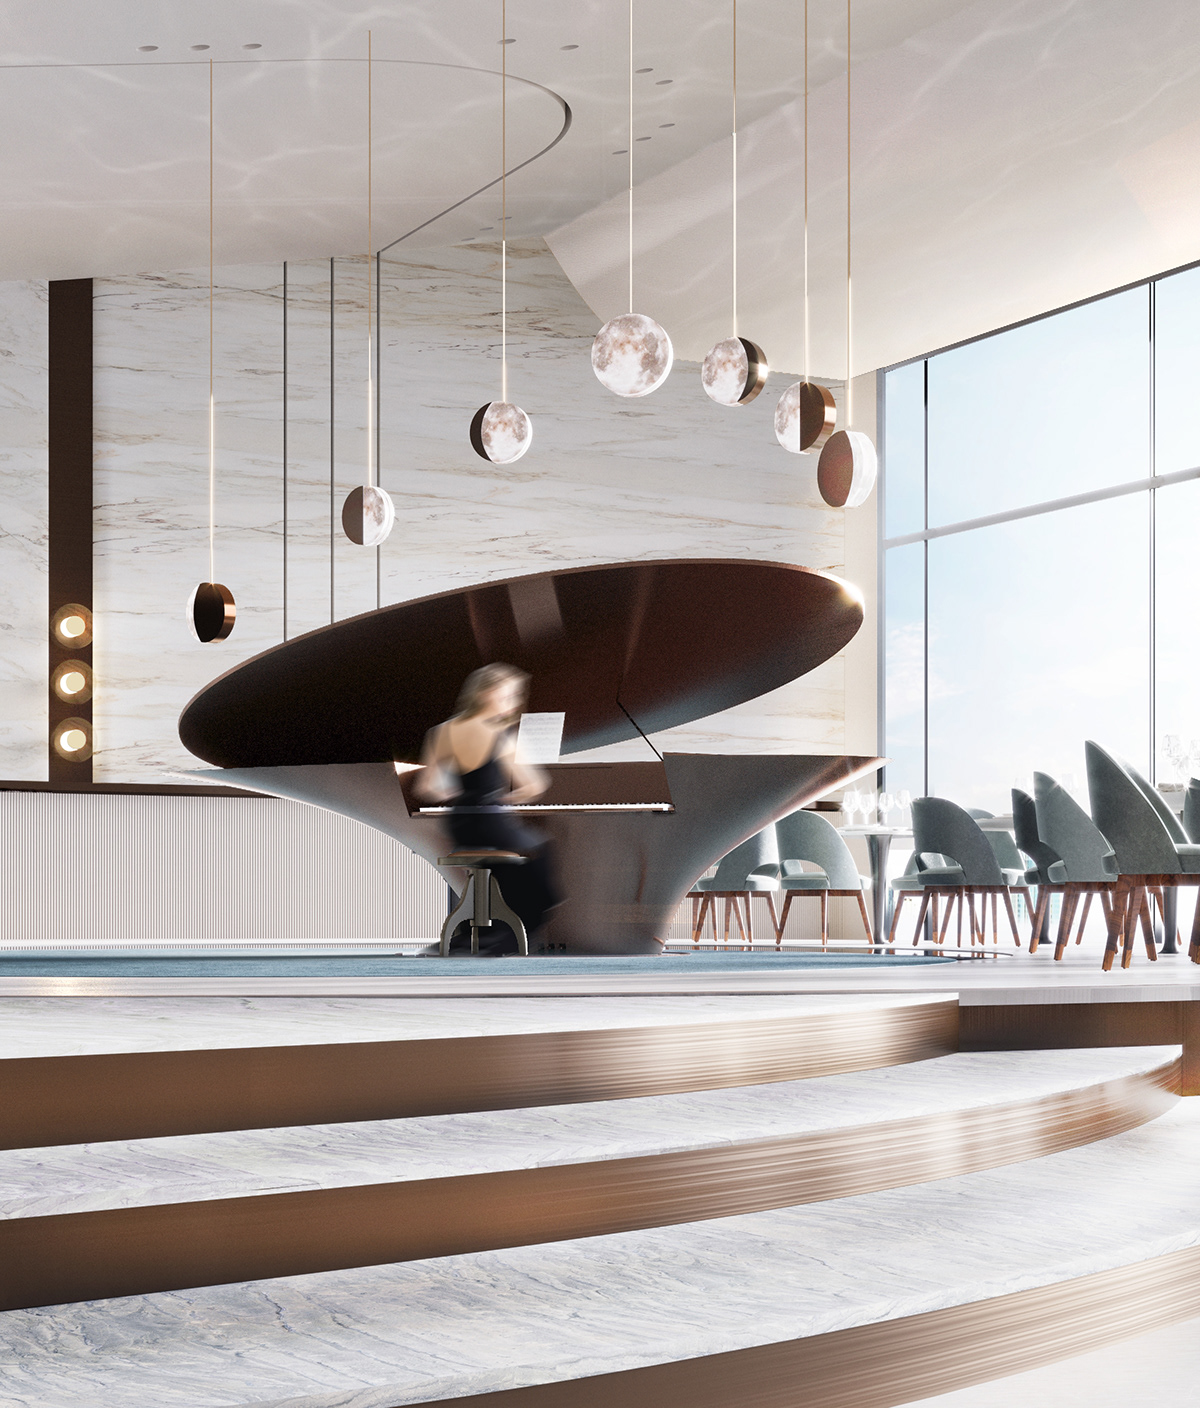 #bar #dubai #egypt #interior #interiordesign #lounge #restaurant #UAE #visualization 